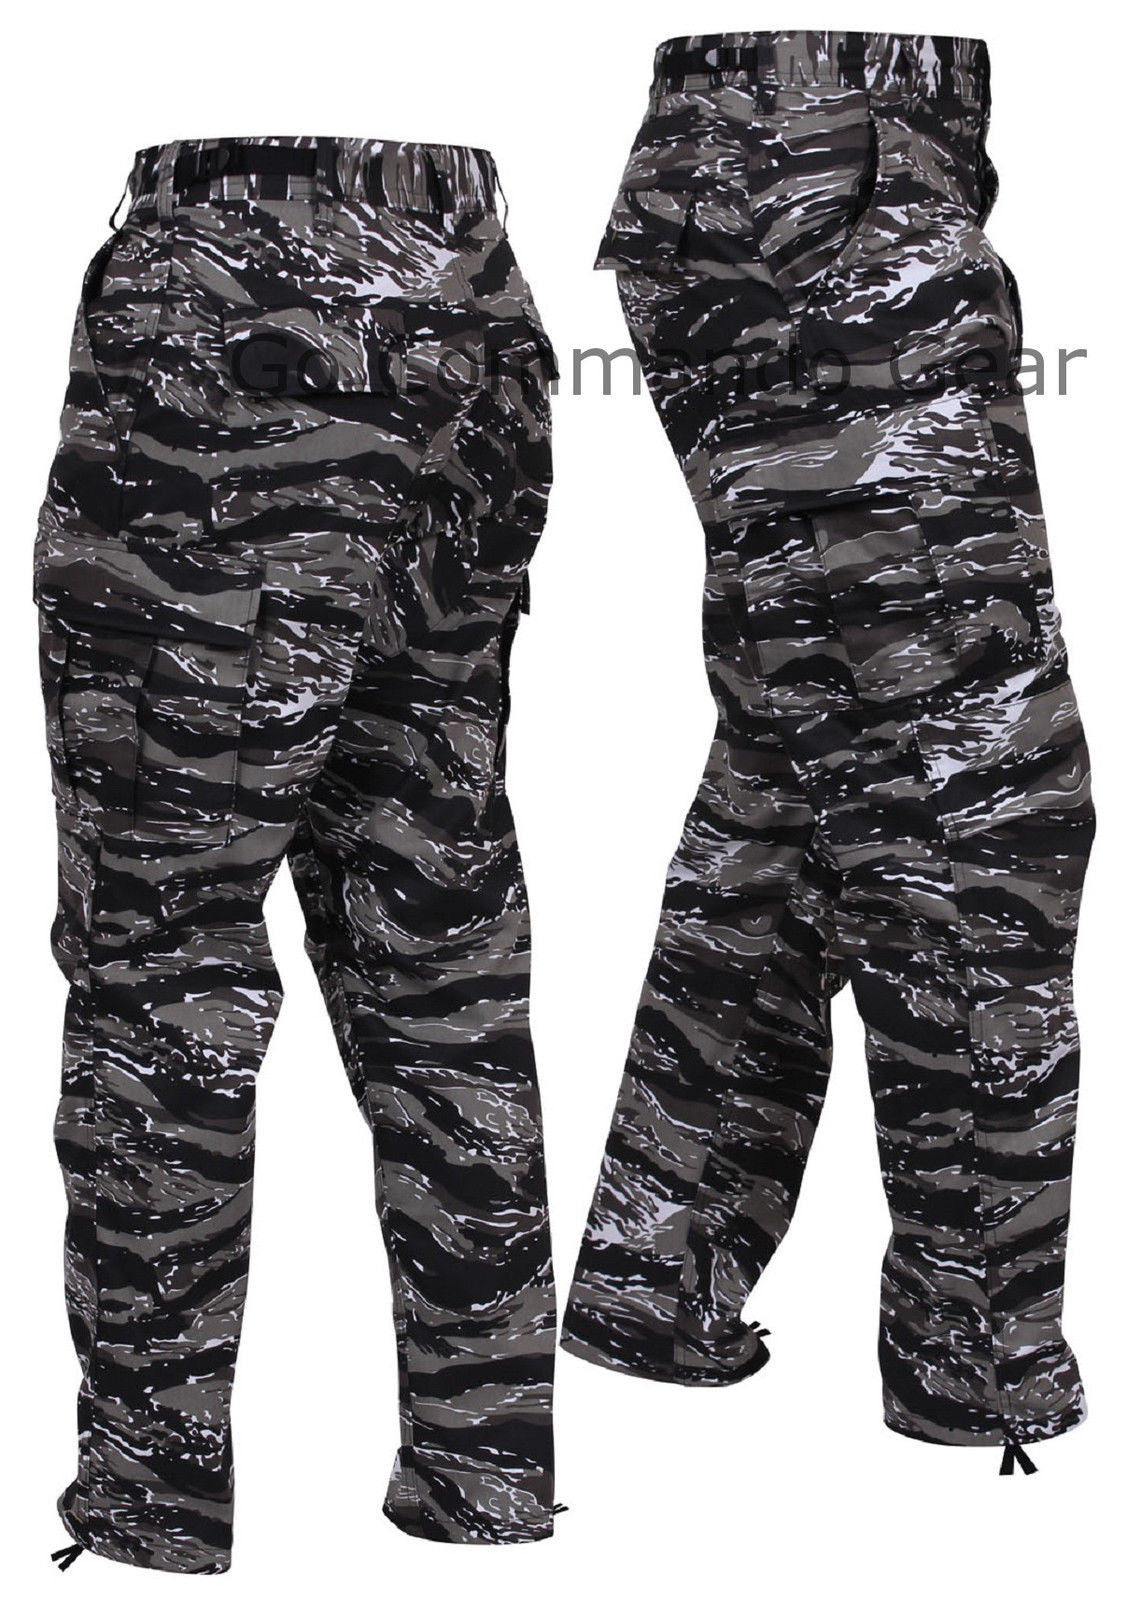 camo pants with black stripe